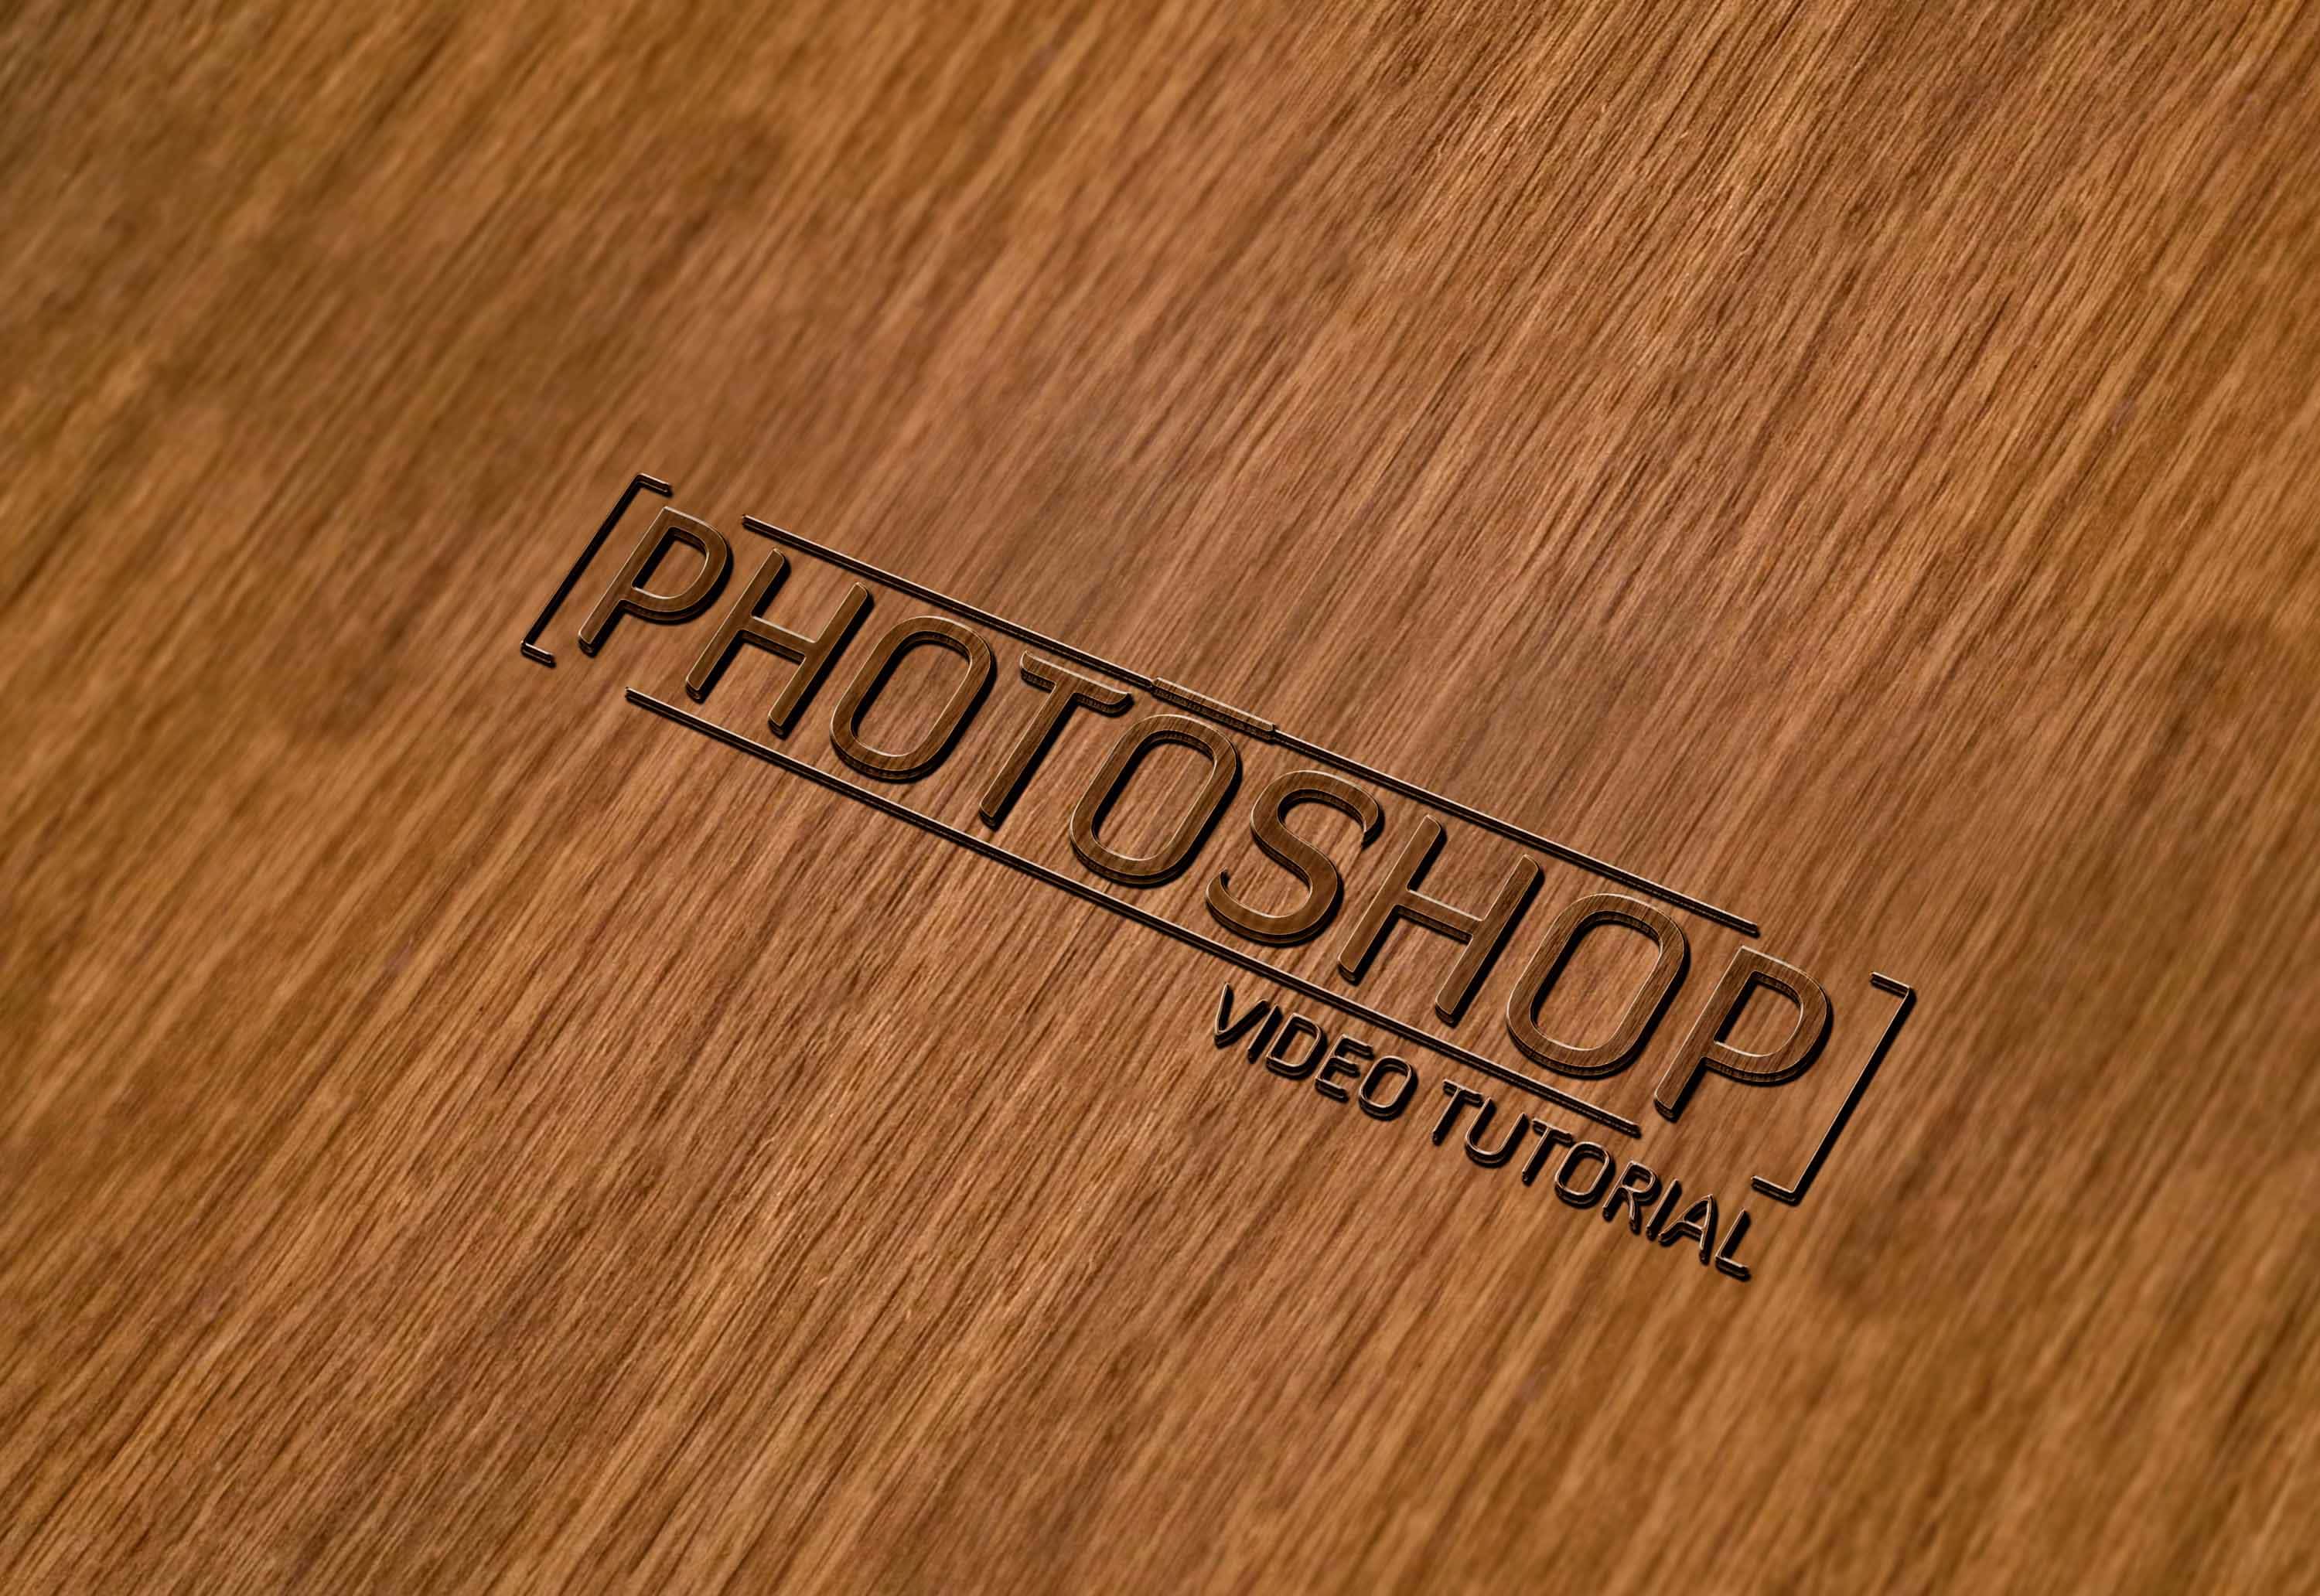 PRINTED WOOD logo-mockup- photoshopvideotutorial